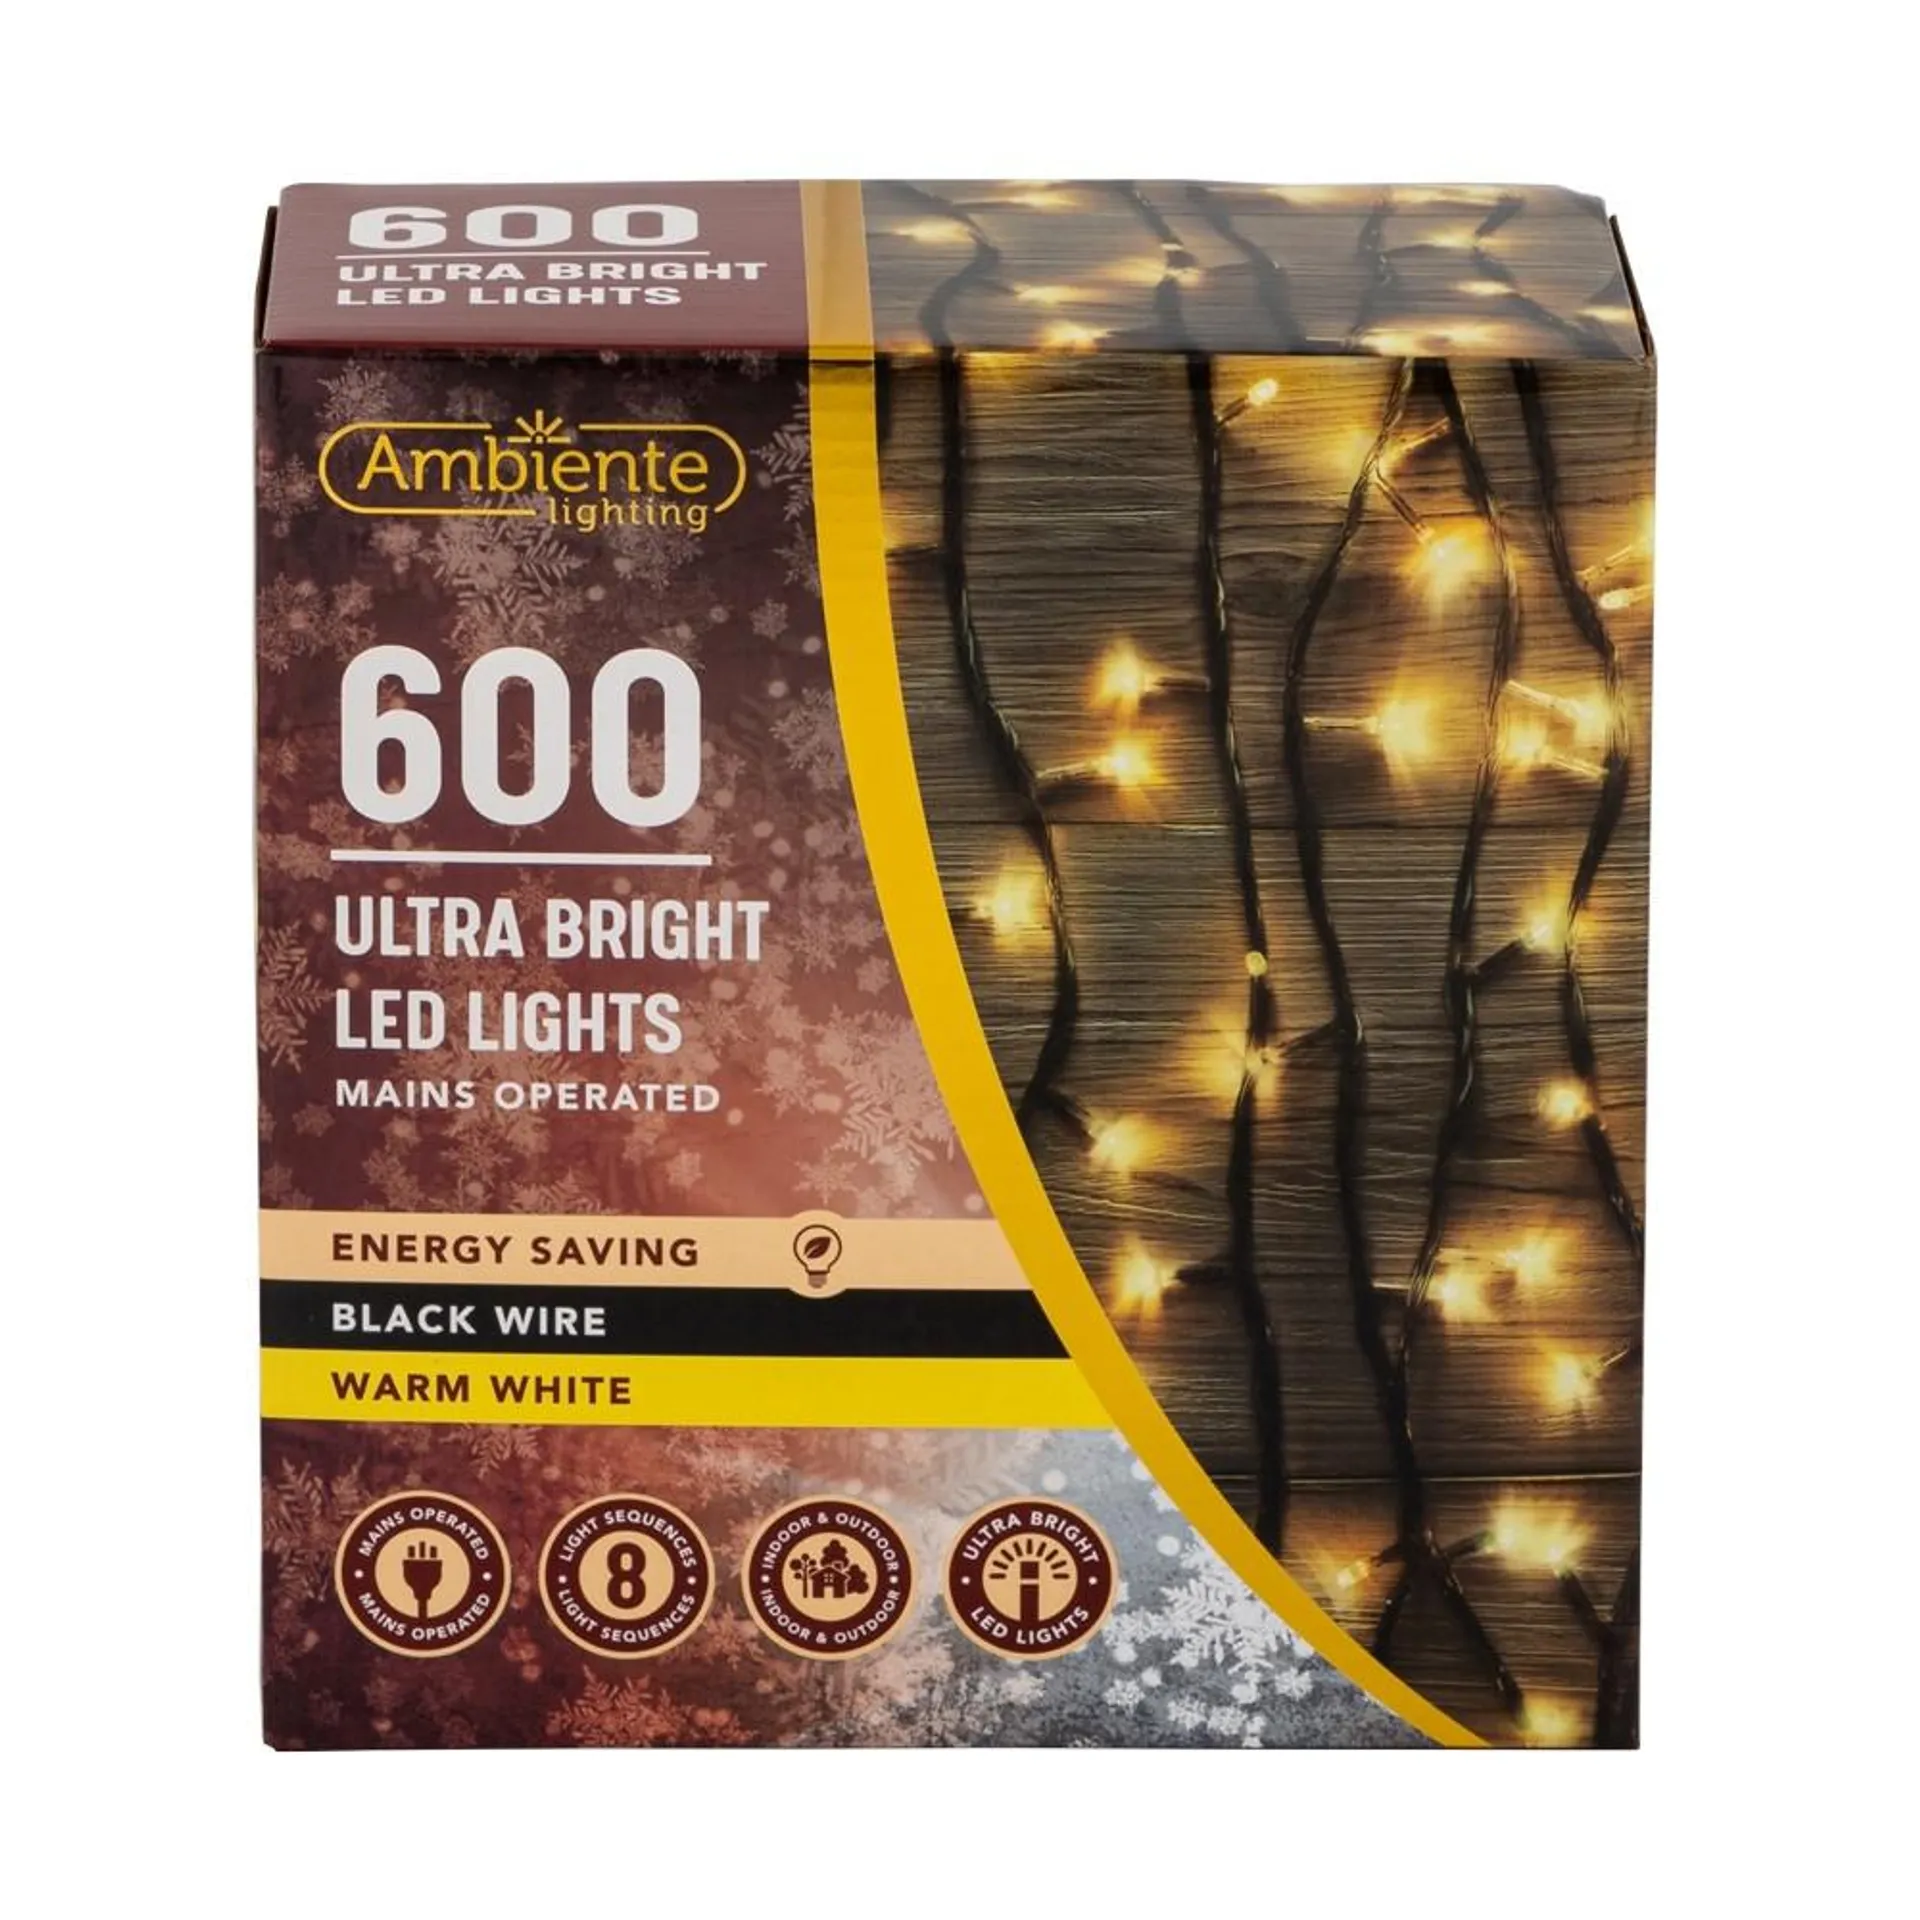 600 ULTRA BRIGHT LED LIGHTS - WARM WHITE